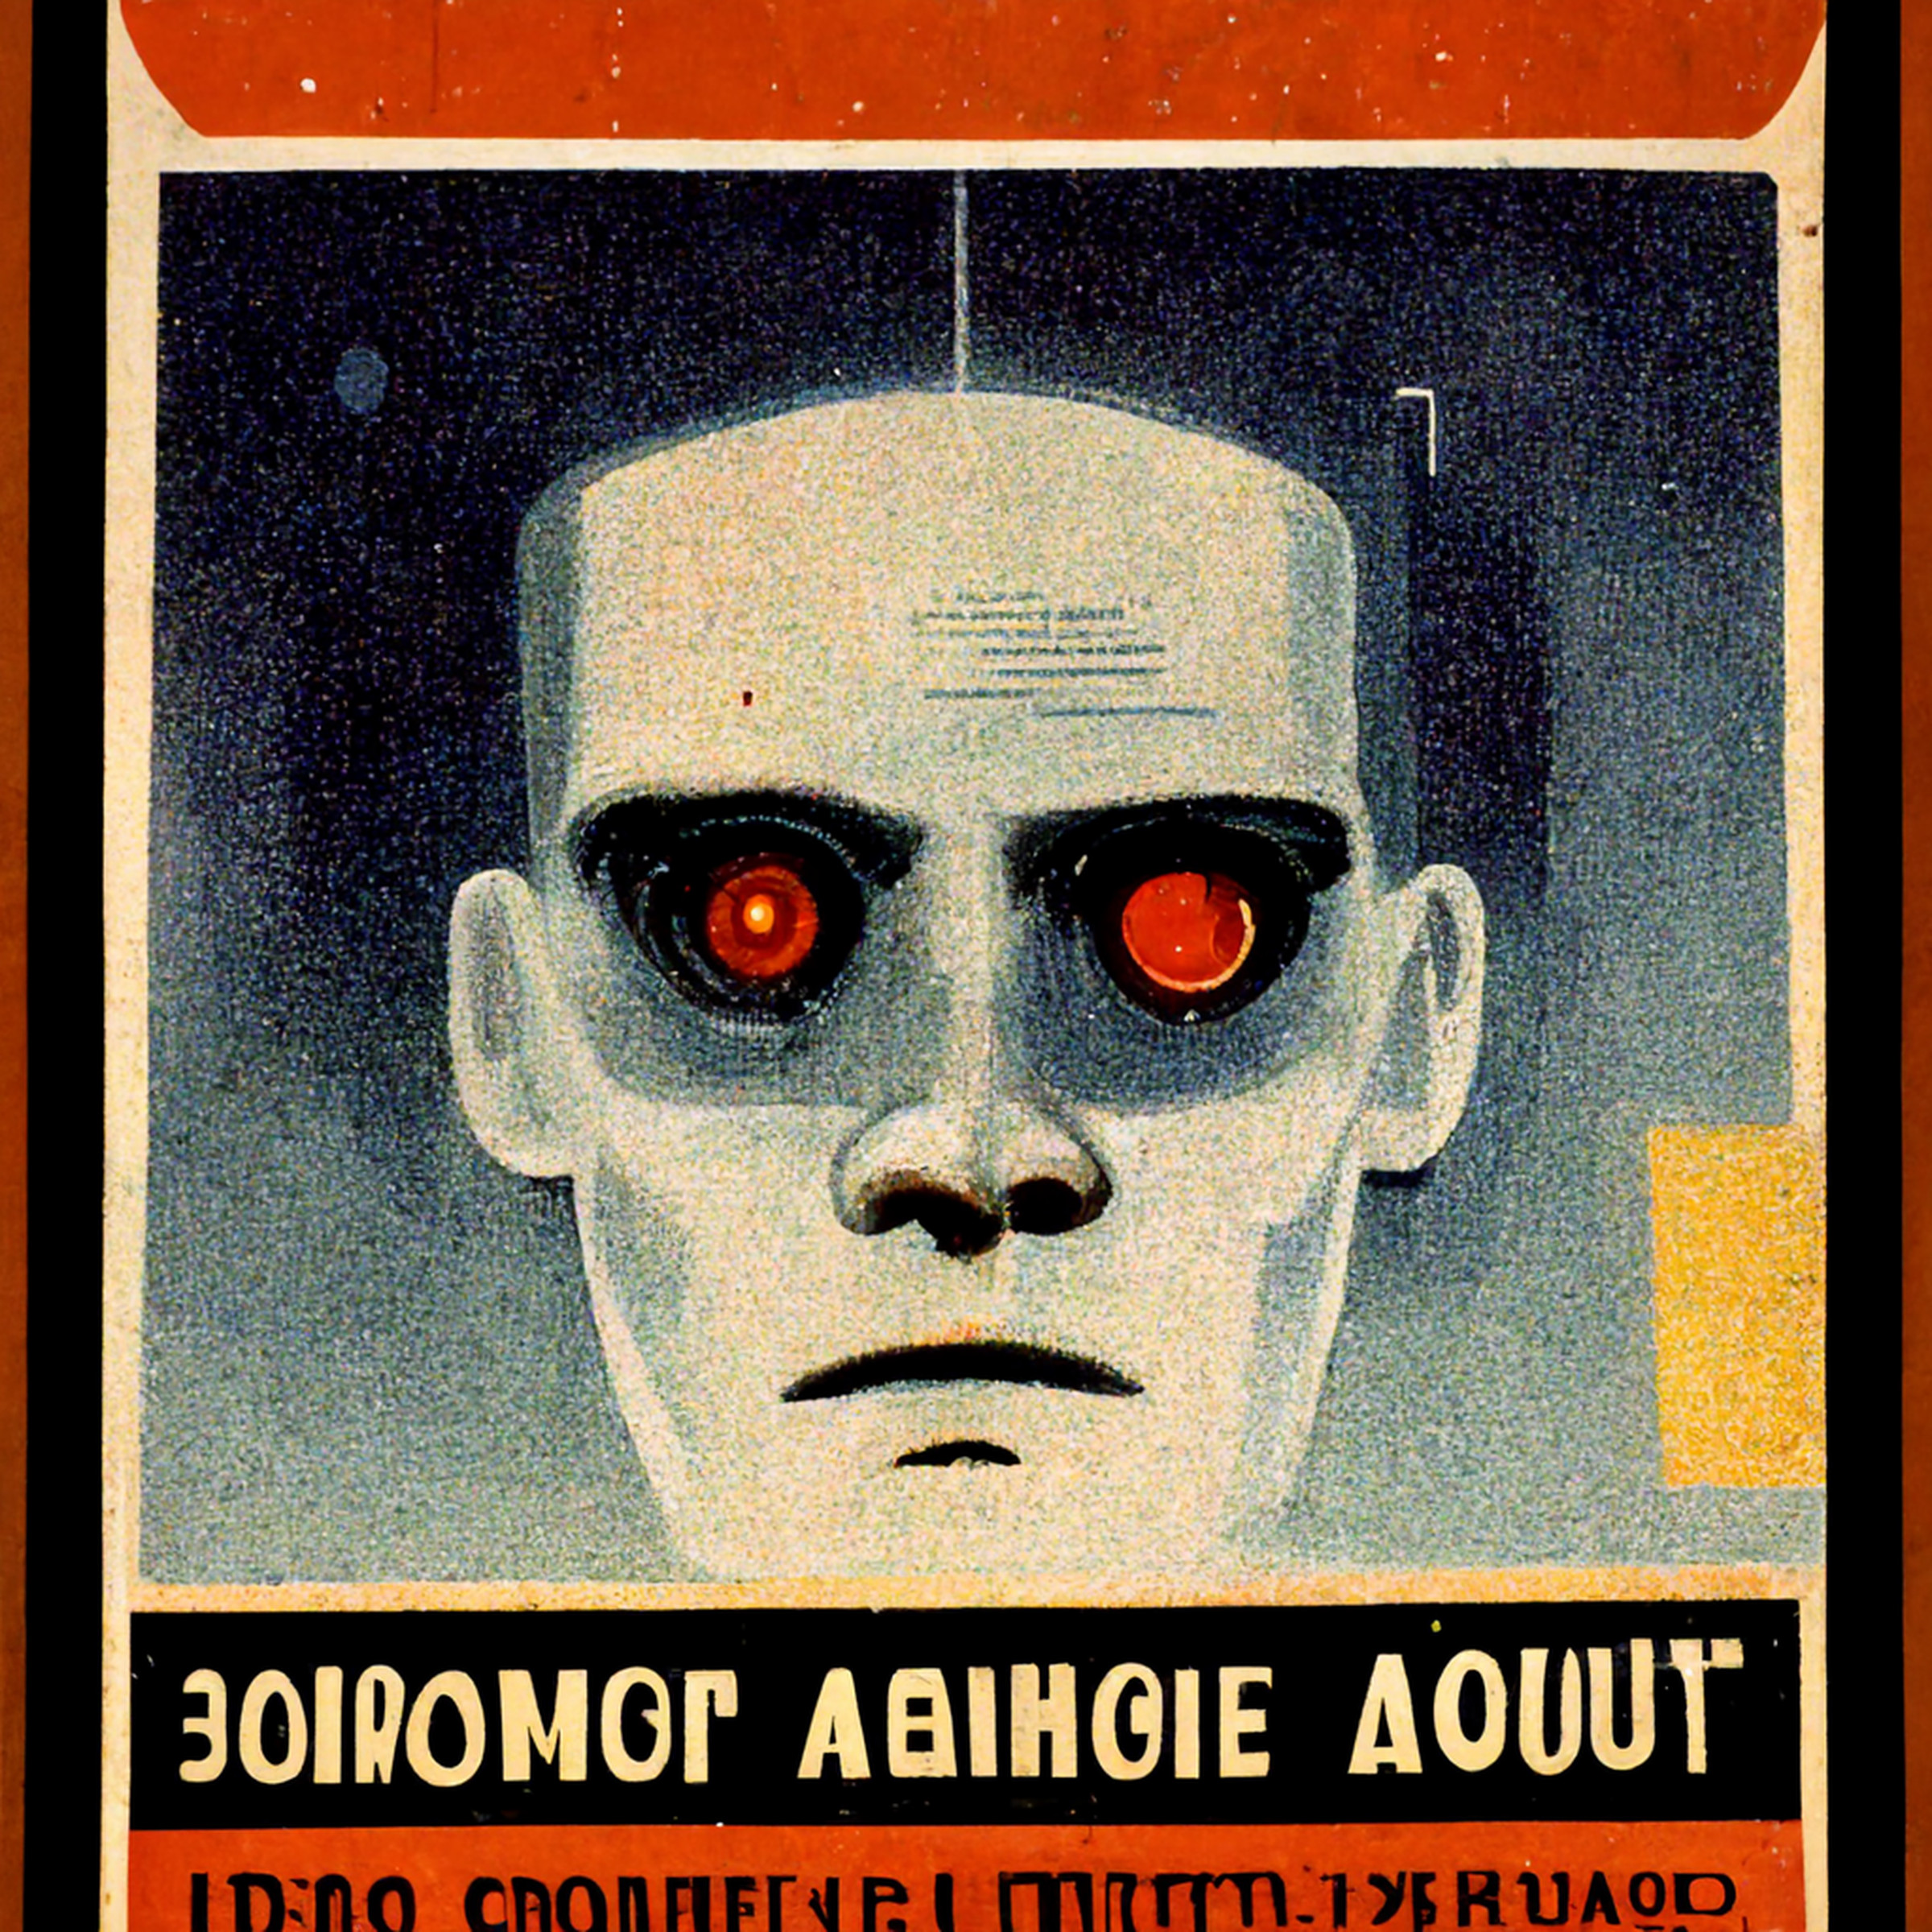 Prompt: “Soviet-era propaganda poster warning about the dangers of rogue AI.”